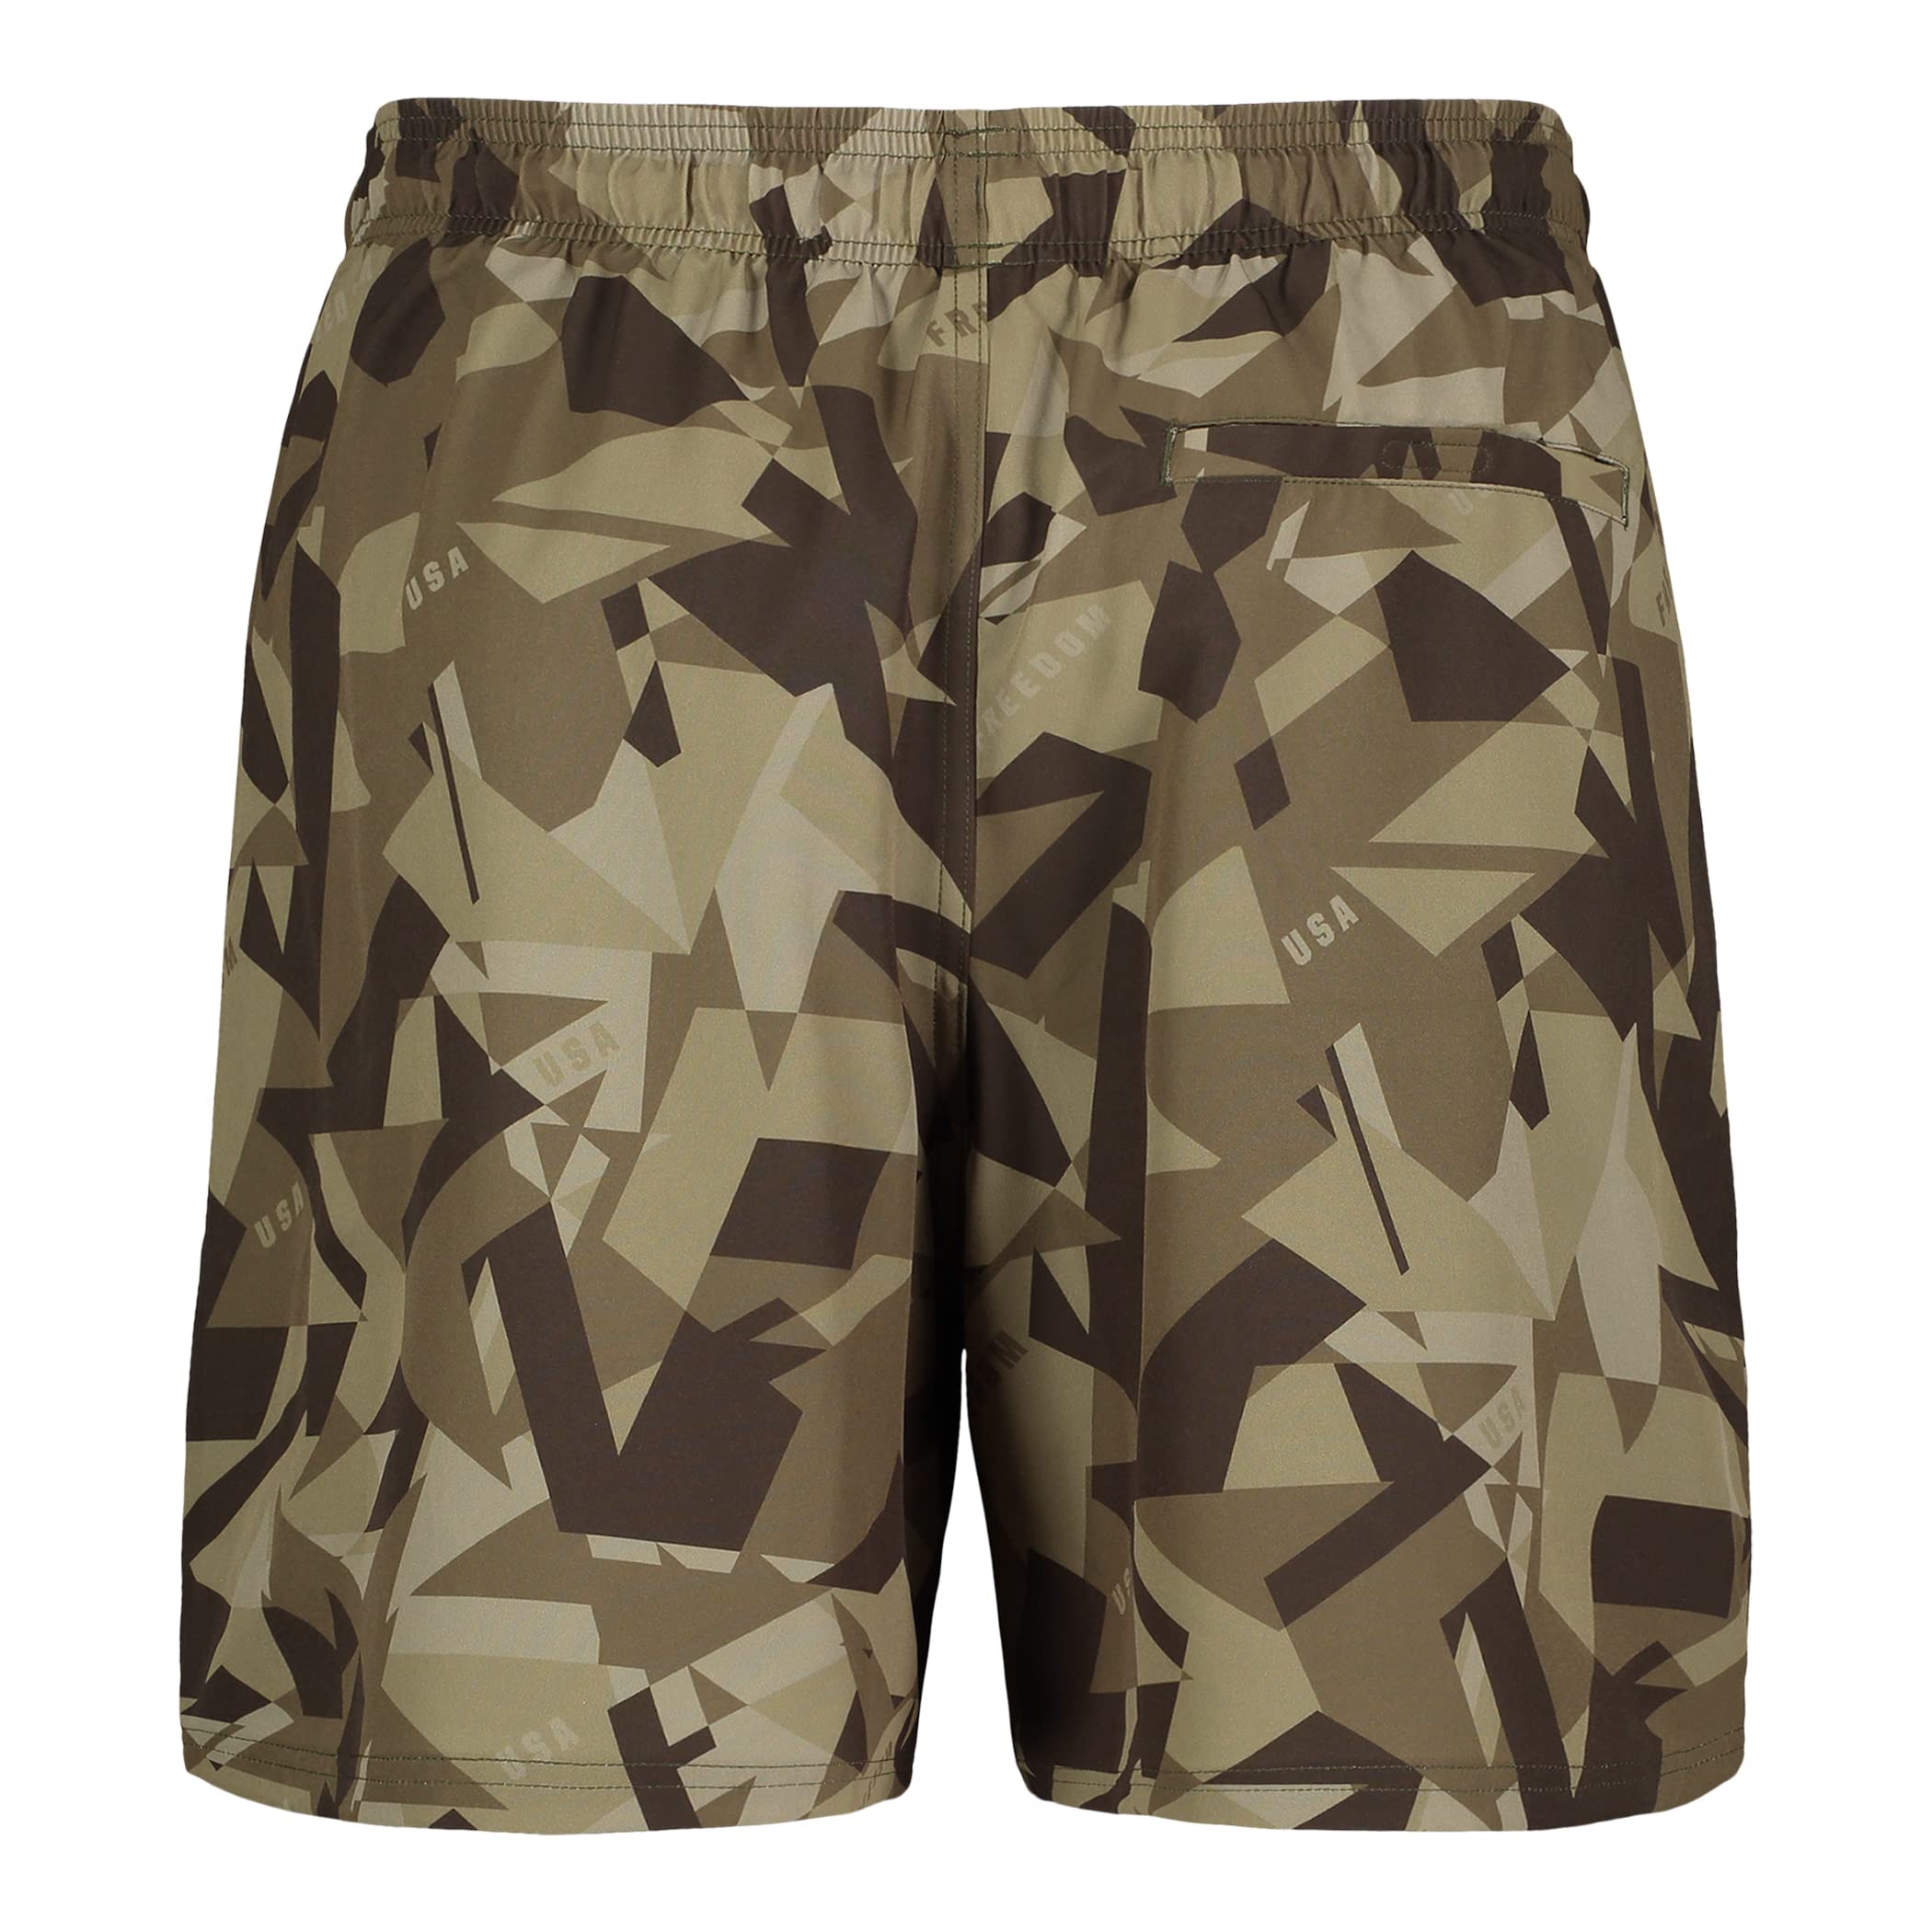 Under Armour Men's Standard Swim Trunks, Shorts with Drawstring Closure & Elastic Waistband